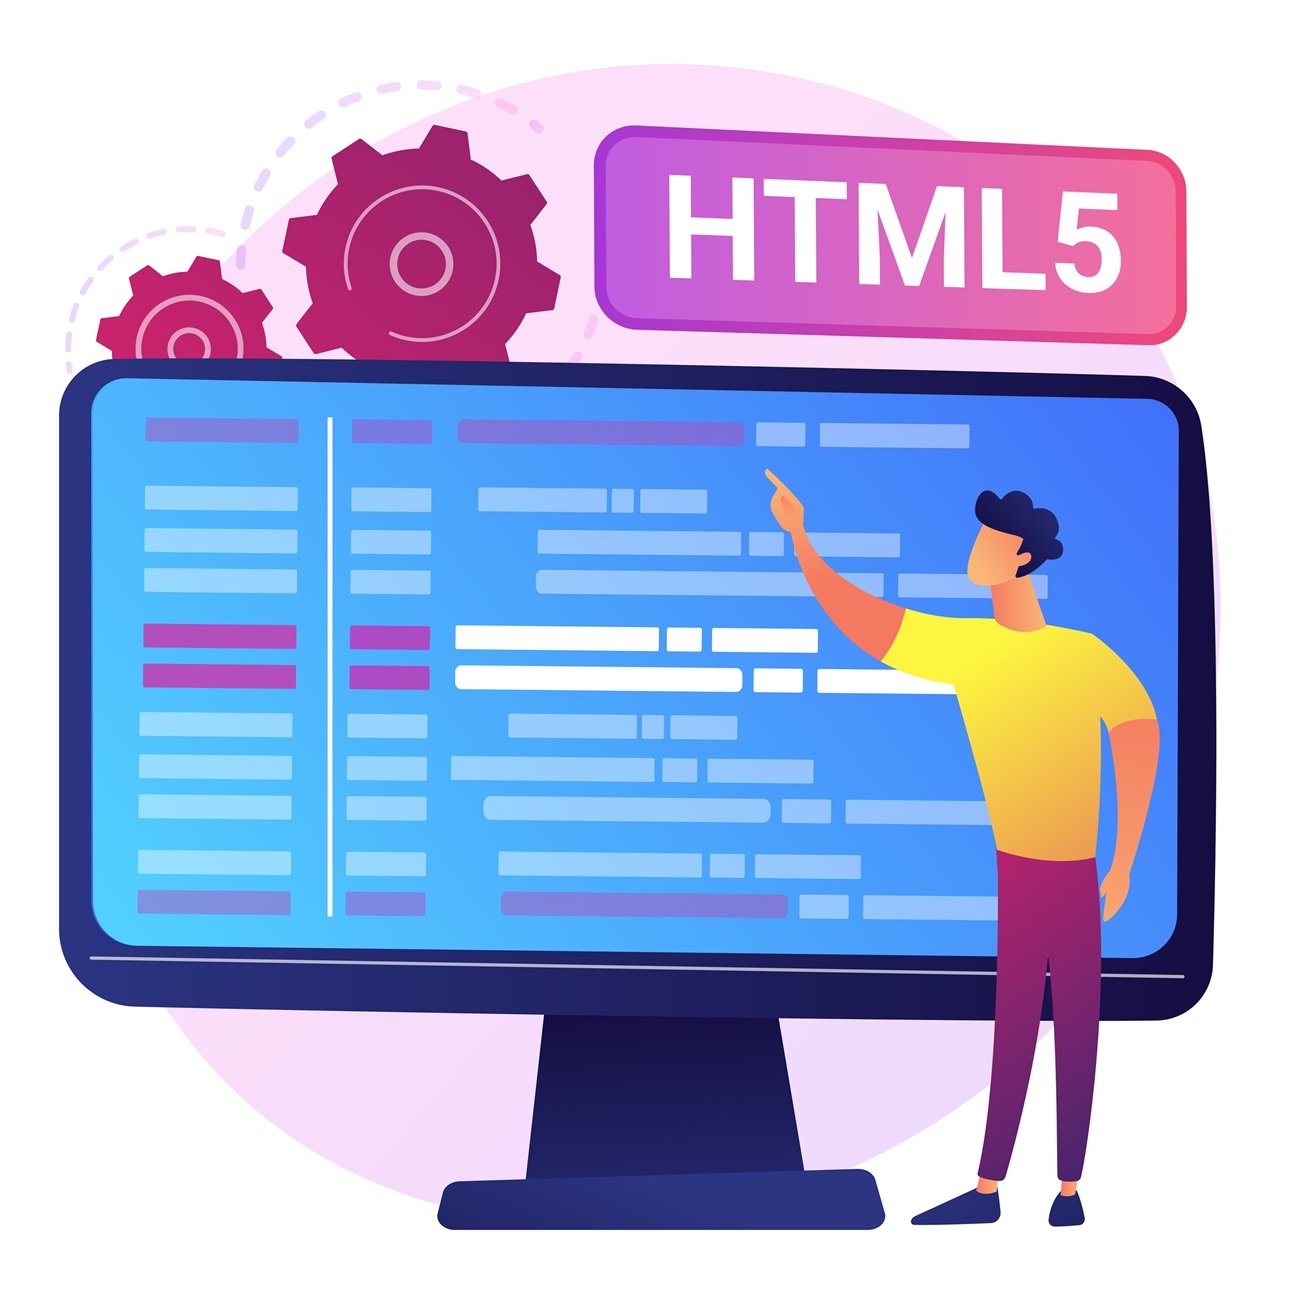 HTML5 programming. Internet website development, web application engineering, script writing. HTML code optimization, programmer fixing bugs. Vector isolated concept metaphor illustration